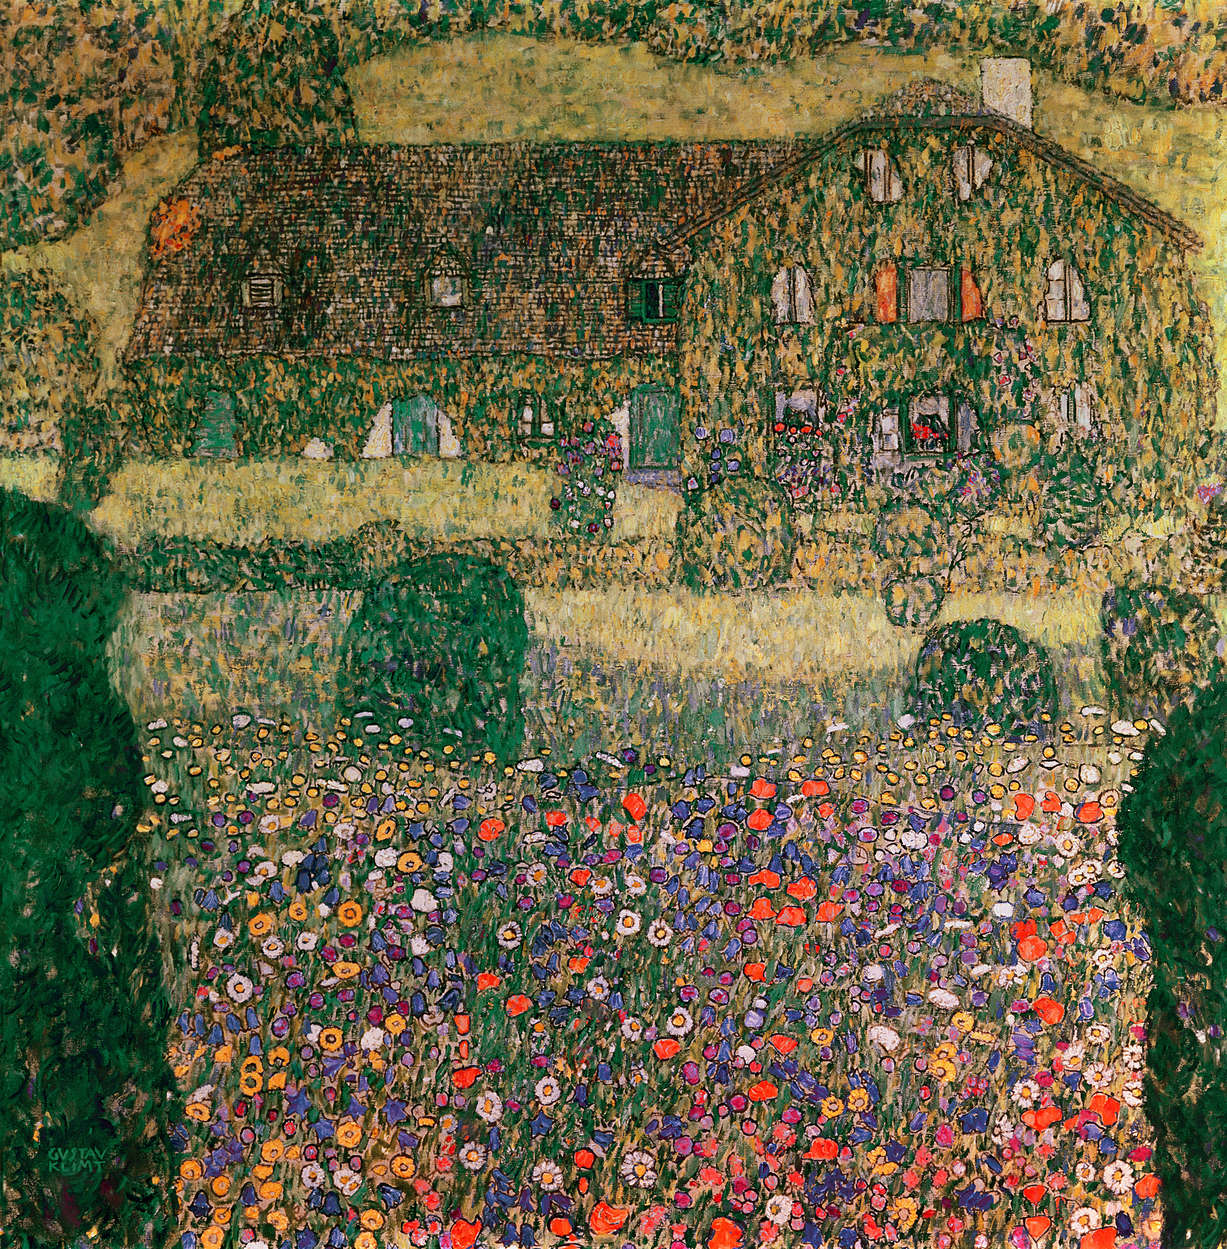             Papier peint panoramique "Landhaus am Attersee" de Gustav Klimt
        